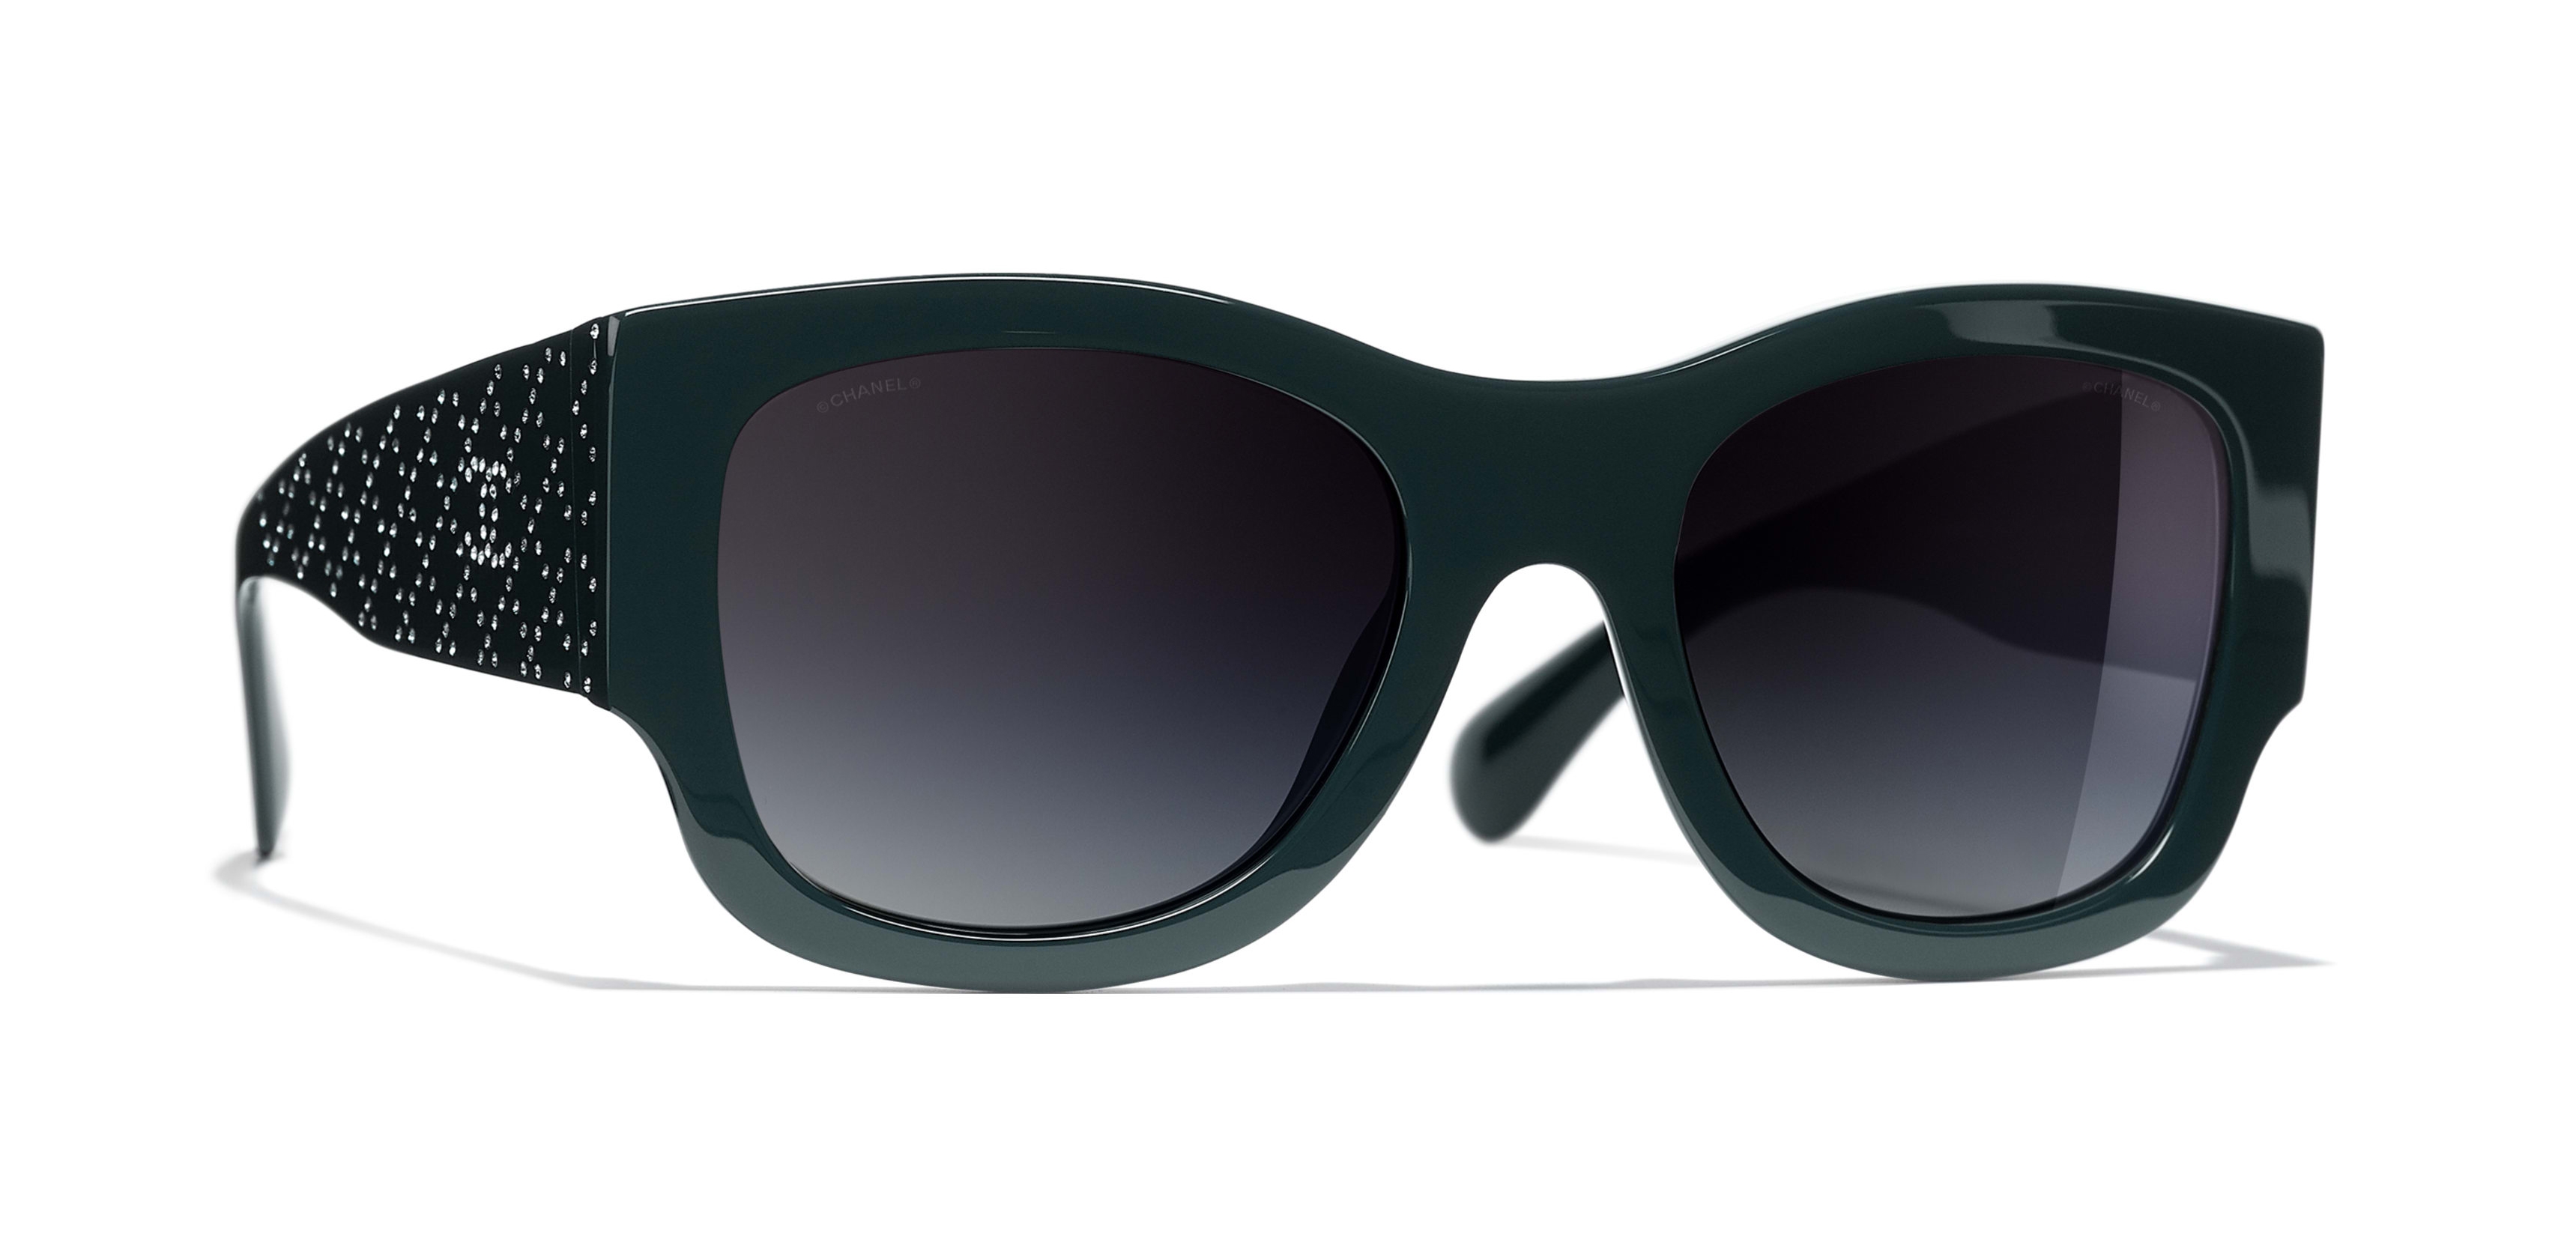 Chanel - Square Eyeglasses - Black Green - Chanel Eyewear - Avvenice